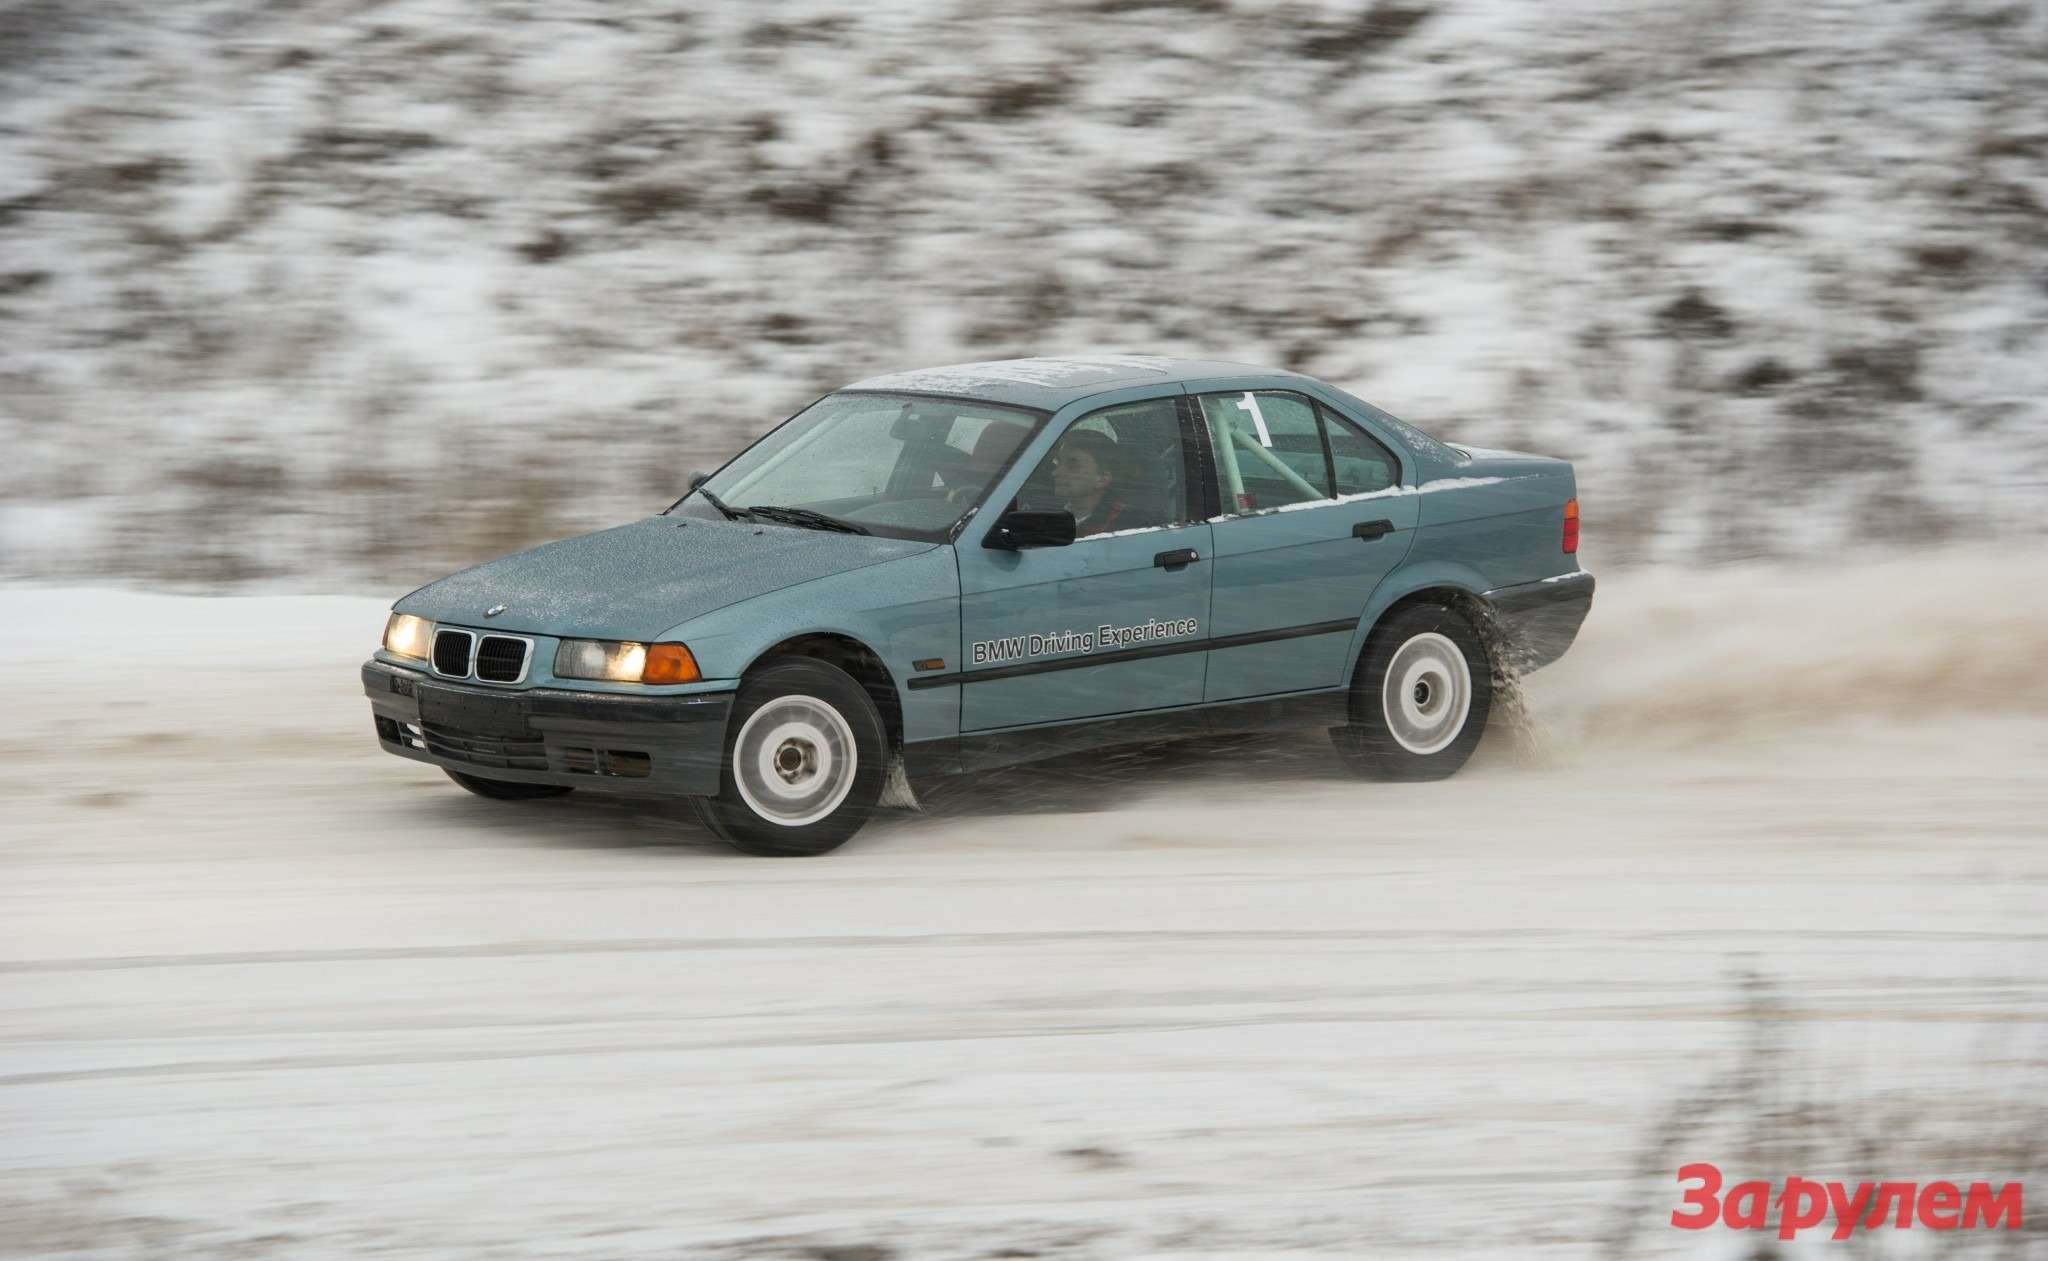 BMW xDrive to Rally (8)